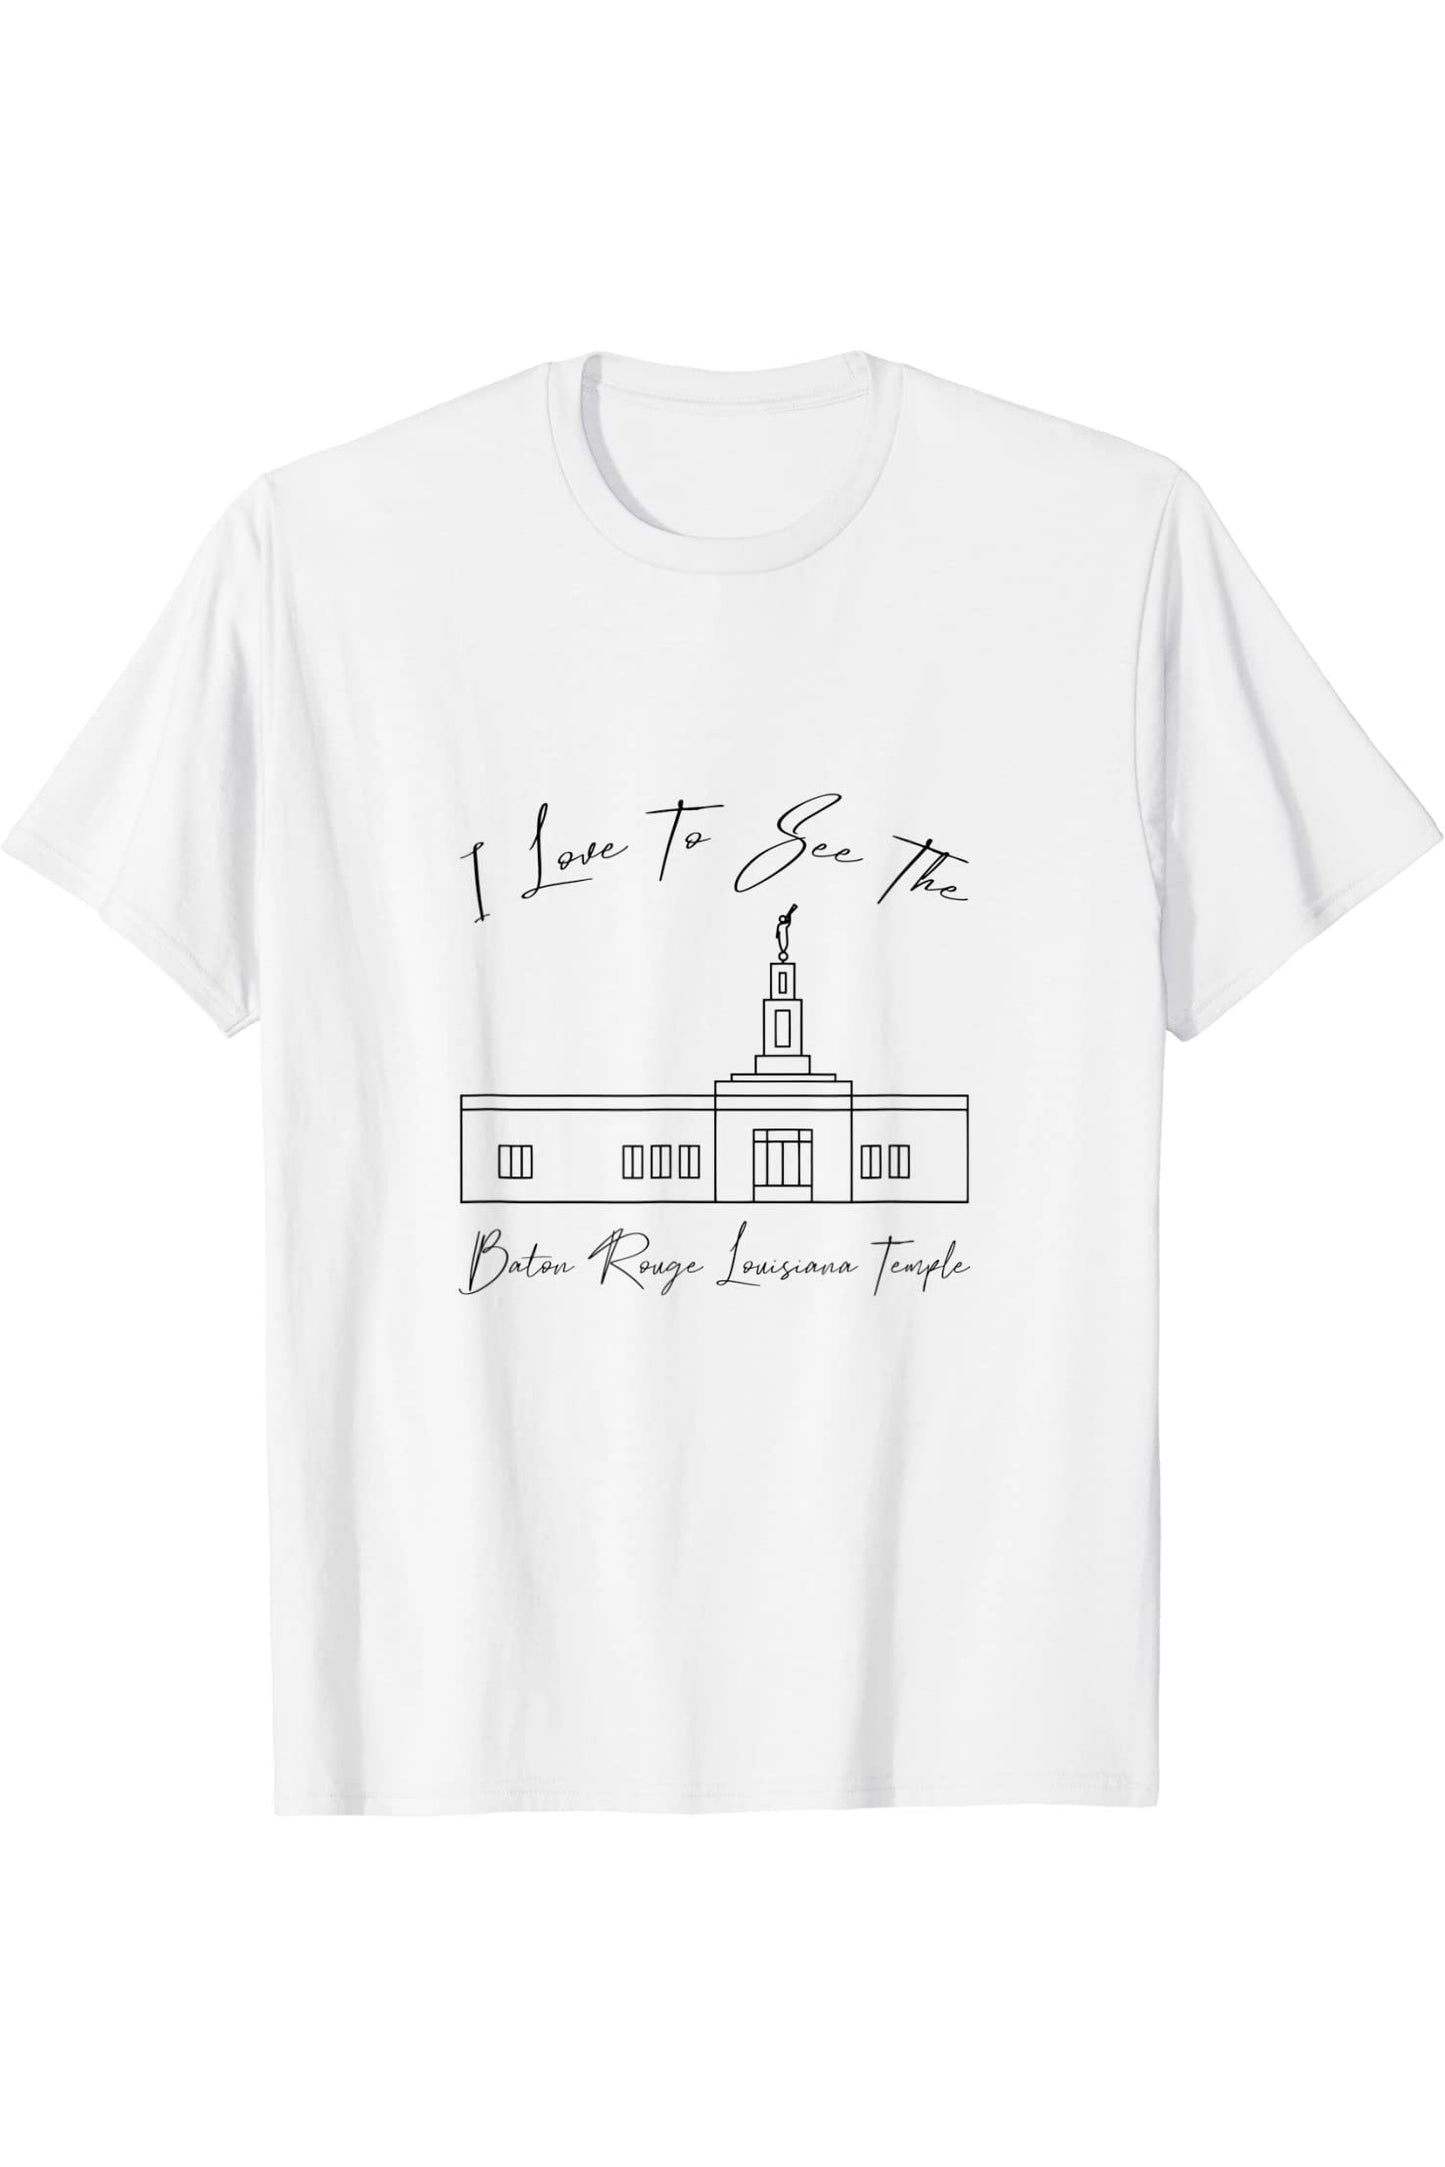 Baton Rouge Louisiana Temple T-Shirt - Calligraphy Style (English) US